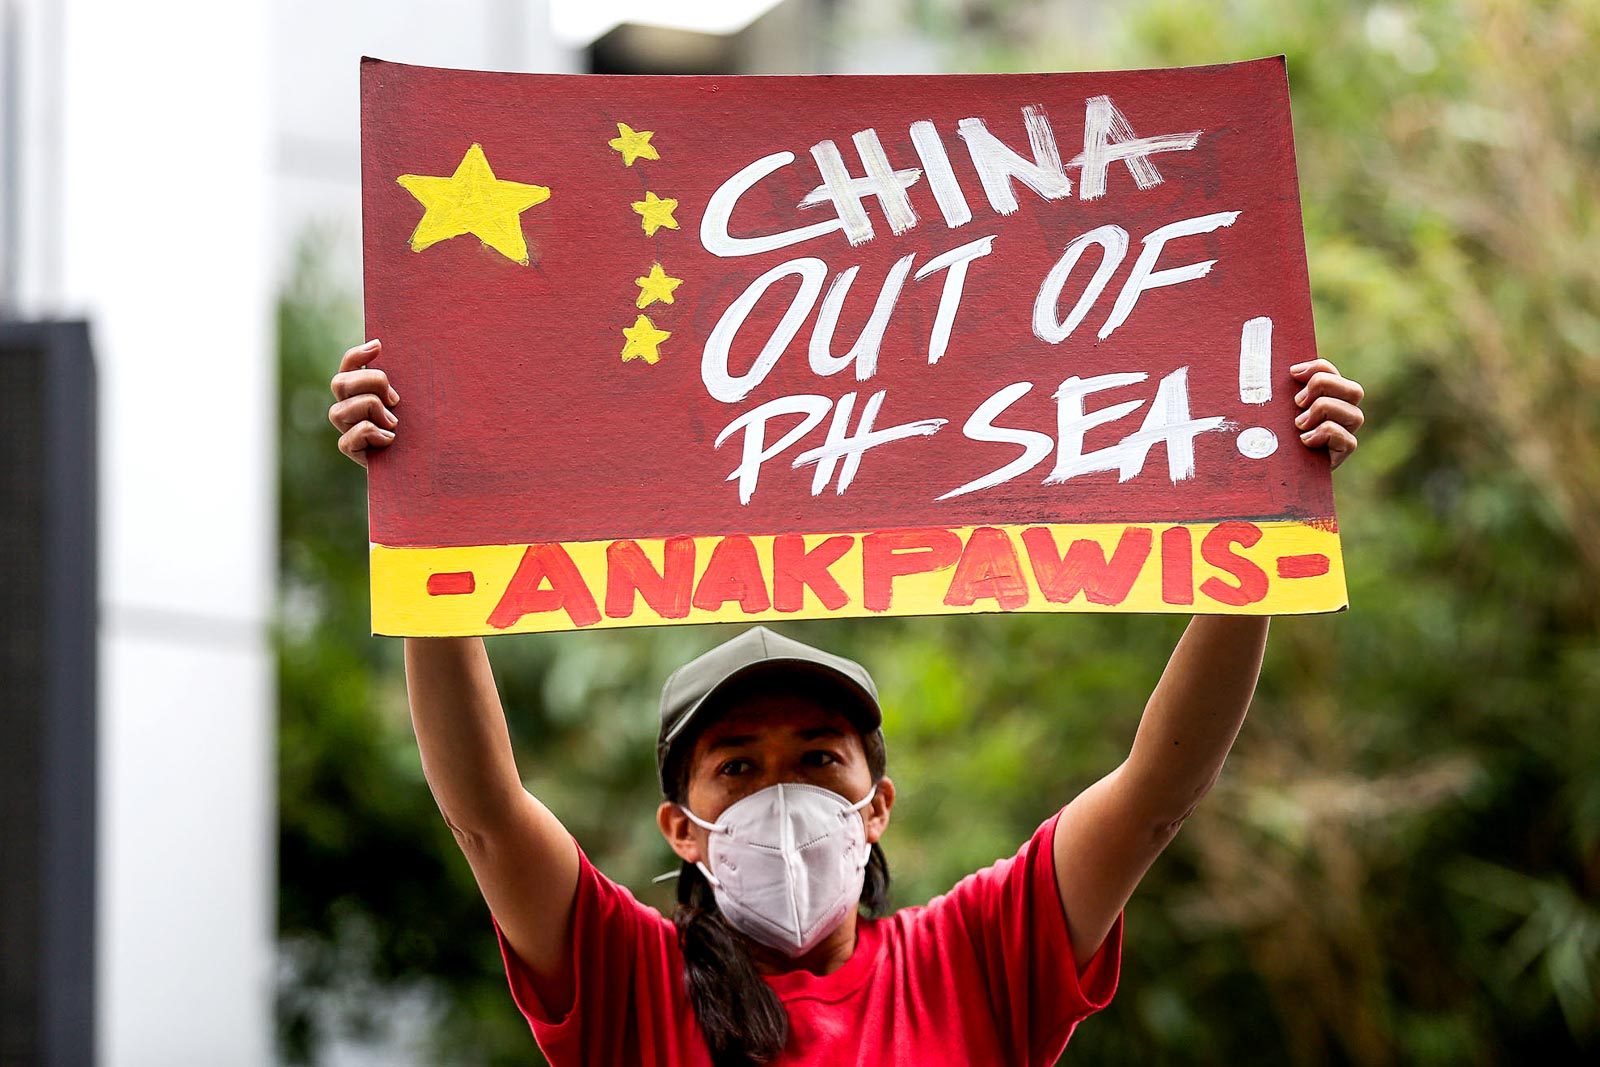 US, EU hit China’s ‘problematic’ actions at sea